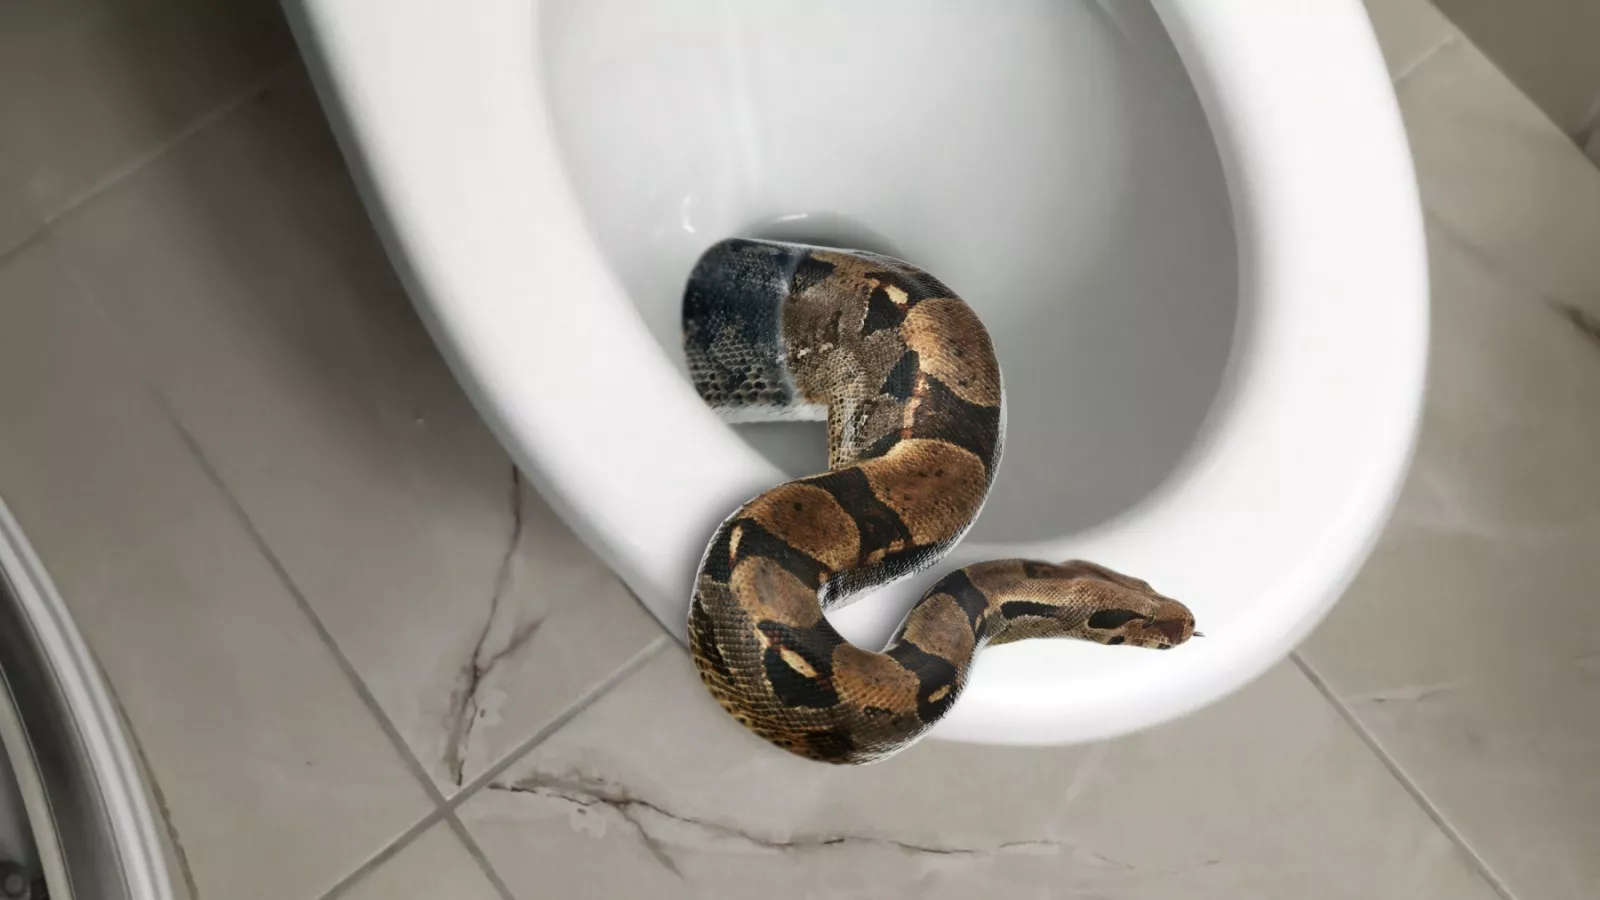 https://d.newsweek.com/en/full/2211788/snake-toilet.webp?w=1600&h=900&q=88&f=55518d6ee8fc6f3e3cb879fbd99c40ed